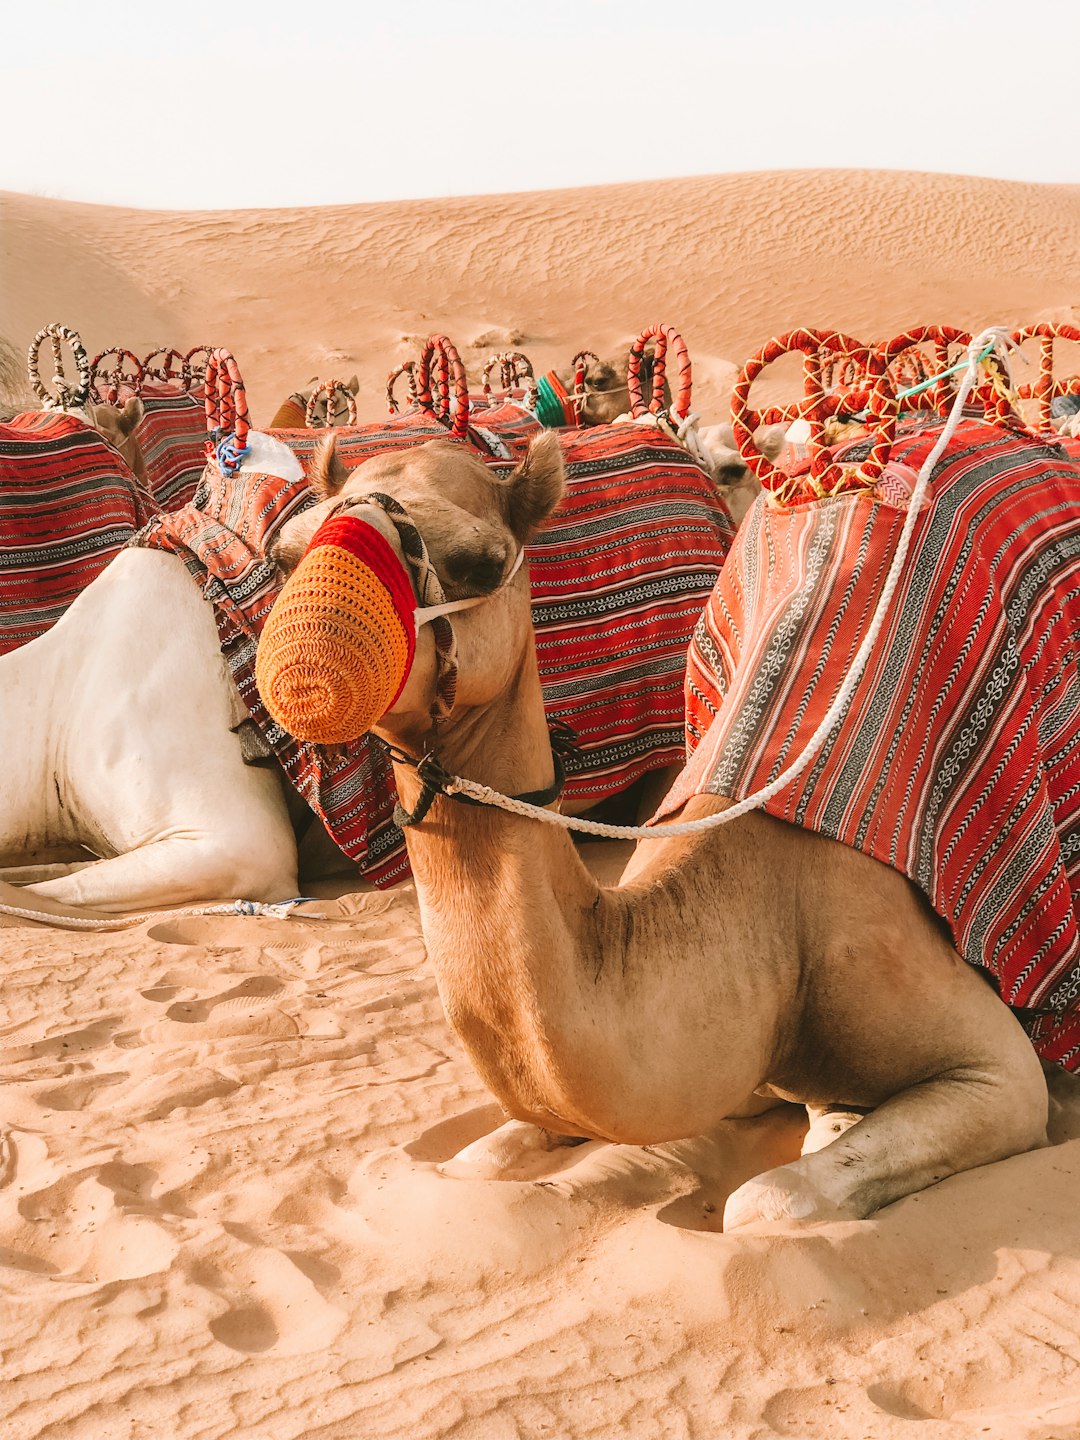 brown camel on desert during daytime